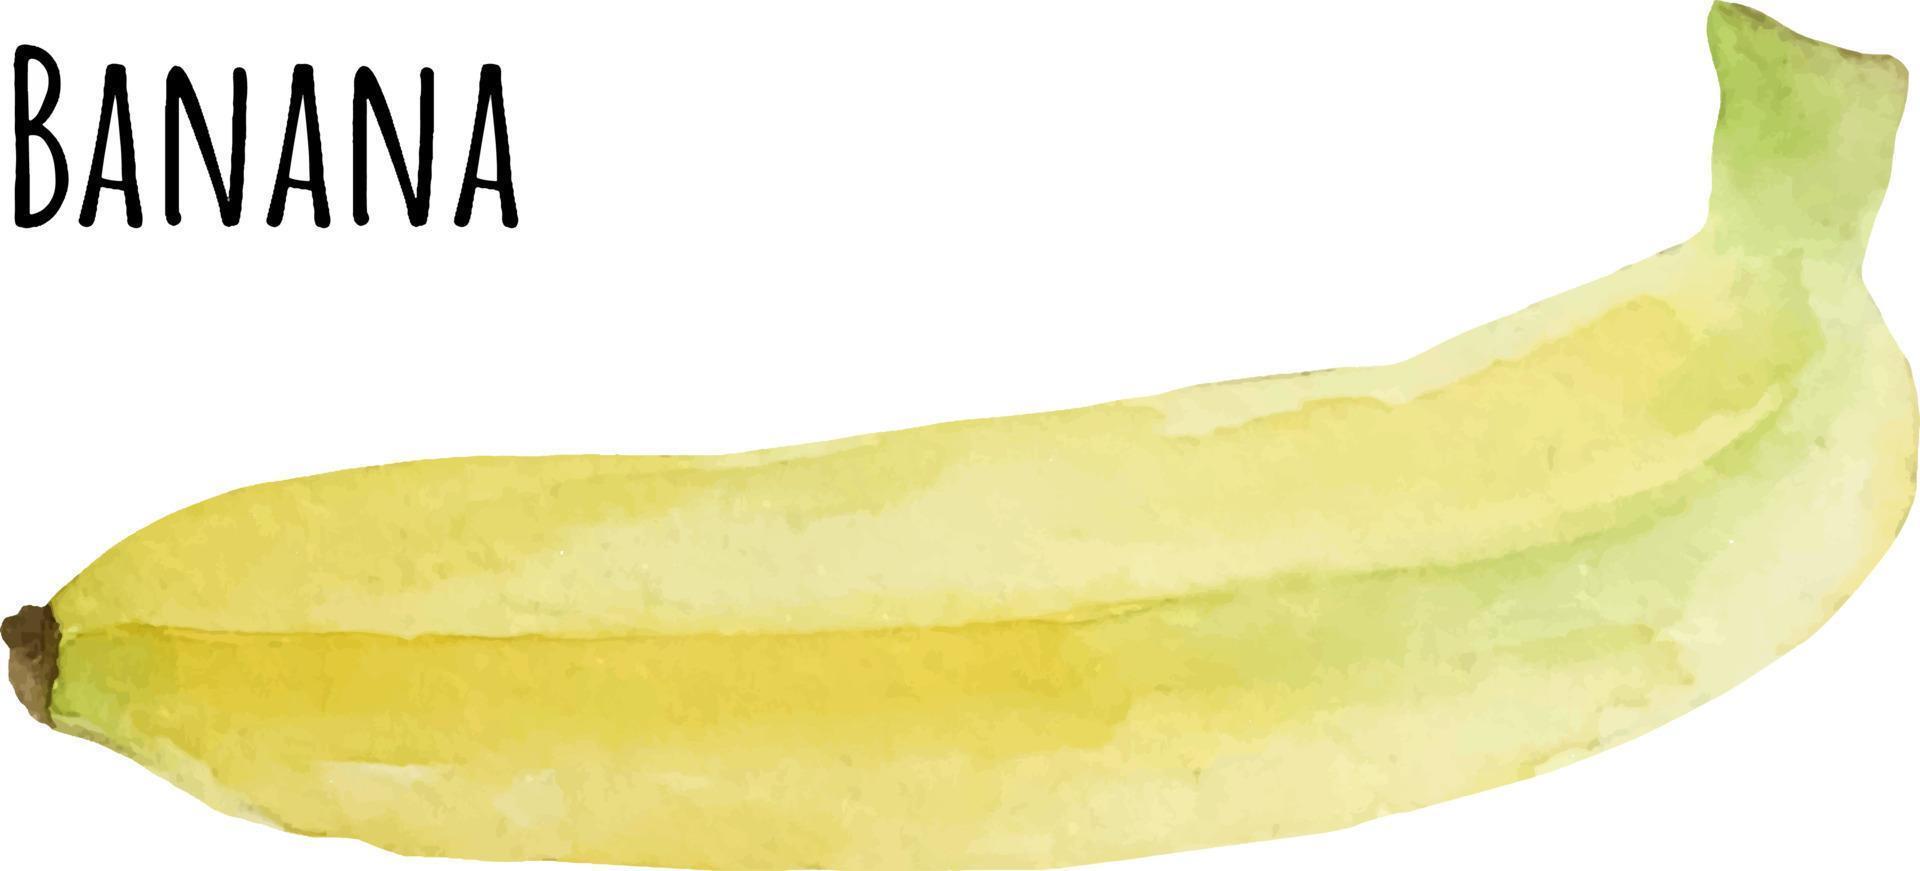 illustration aquarelle de banane jaune. fruits crus frais. illustration d'amant de banane vecteur